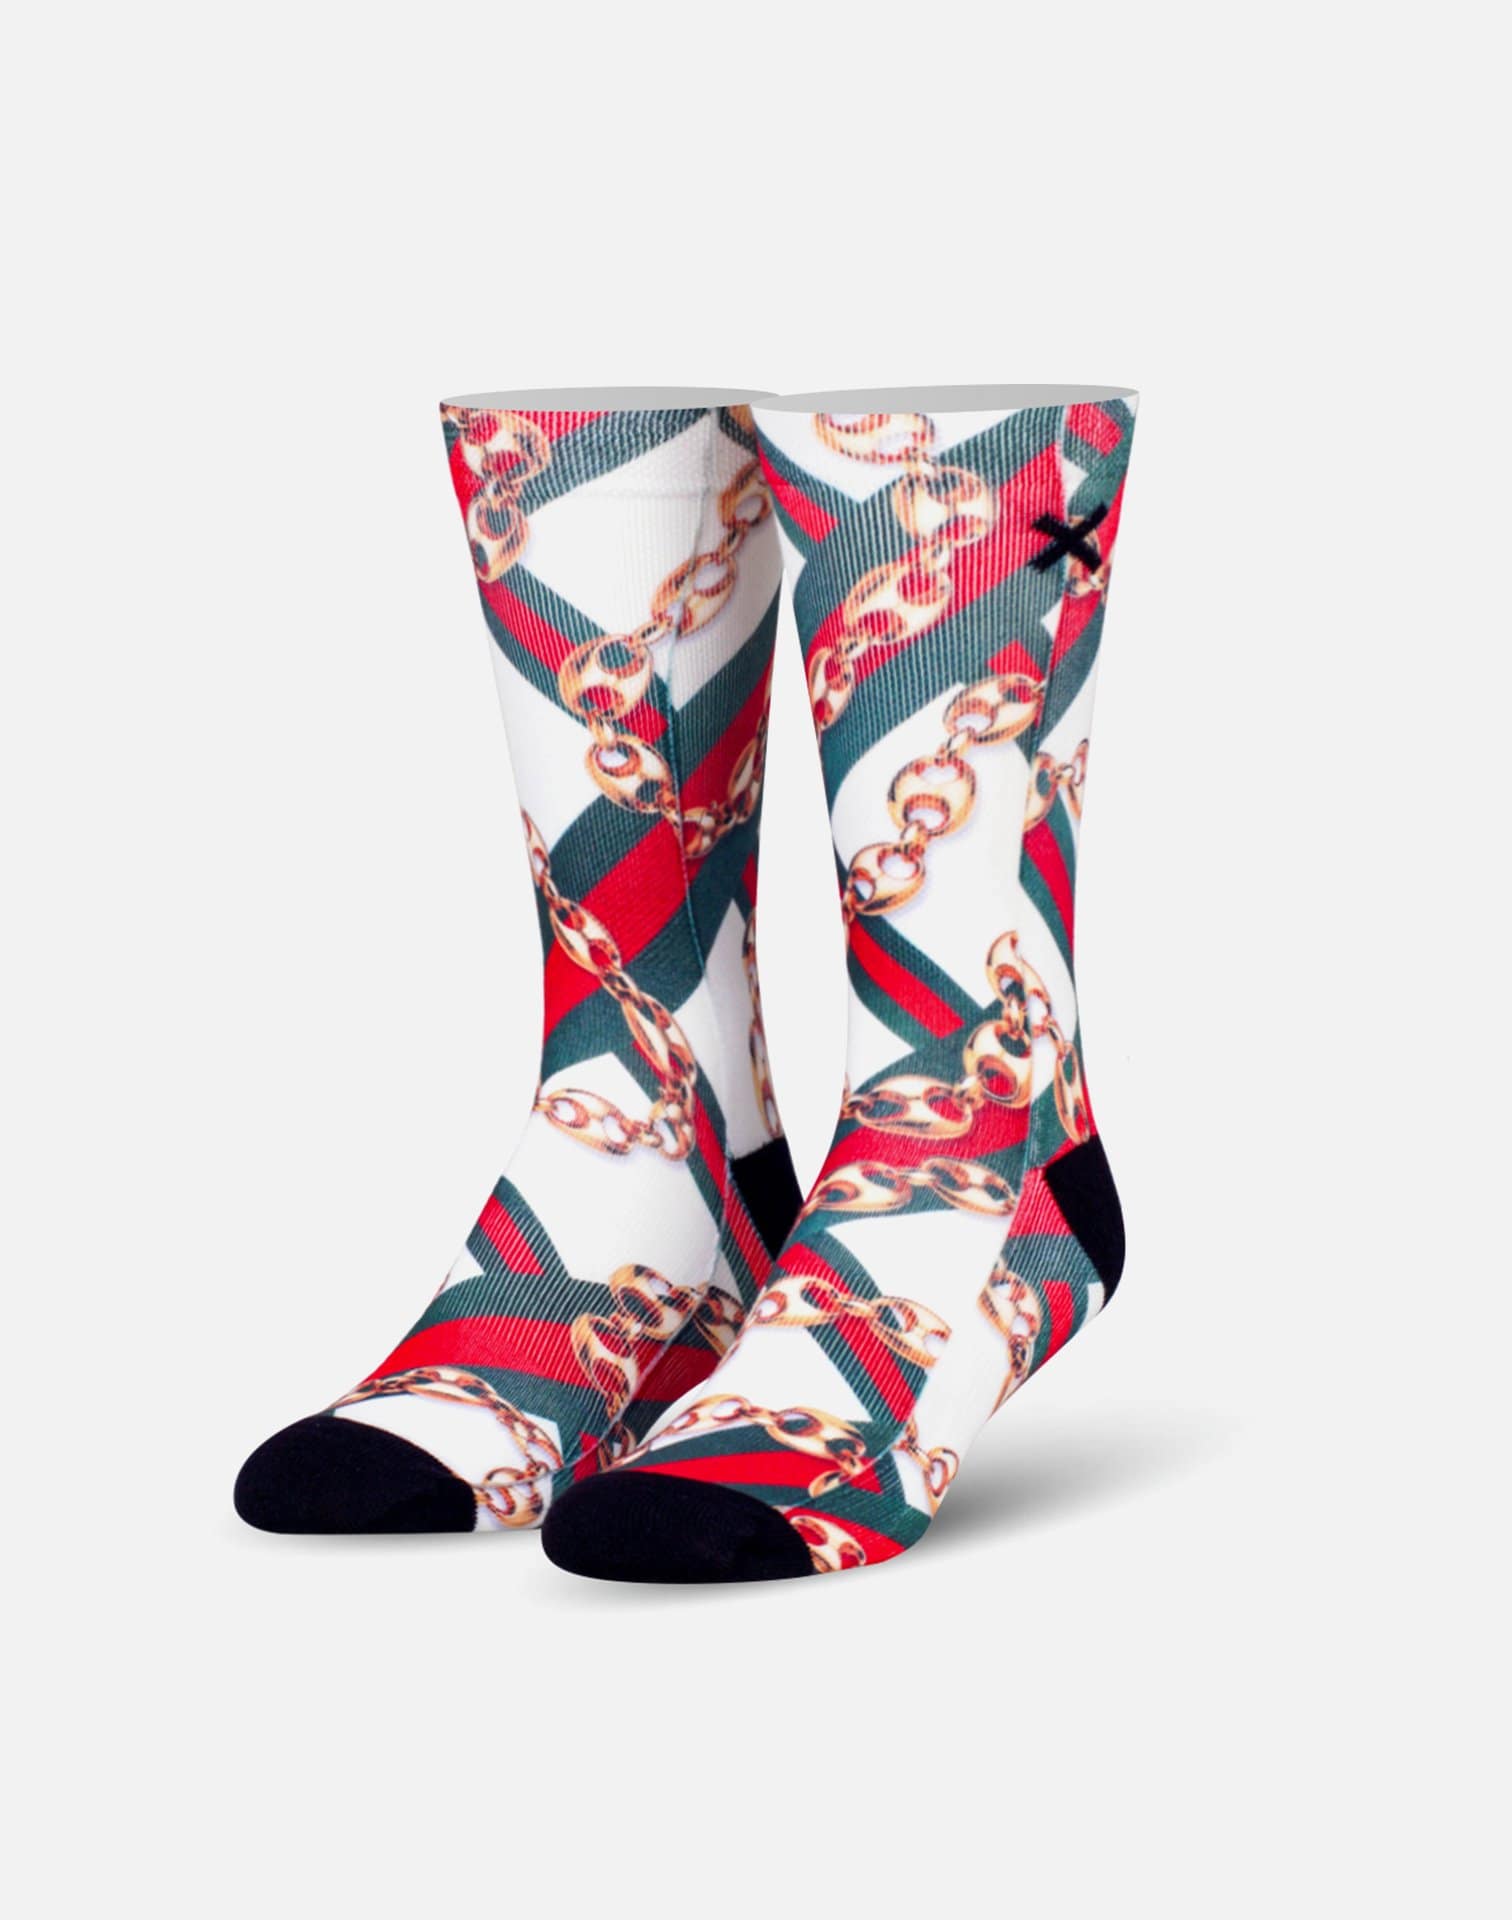 Odd Sox Luxurious Socks